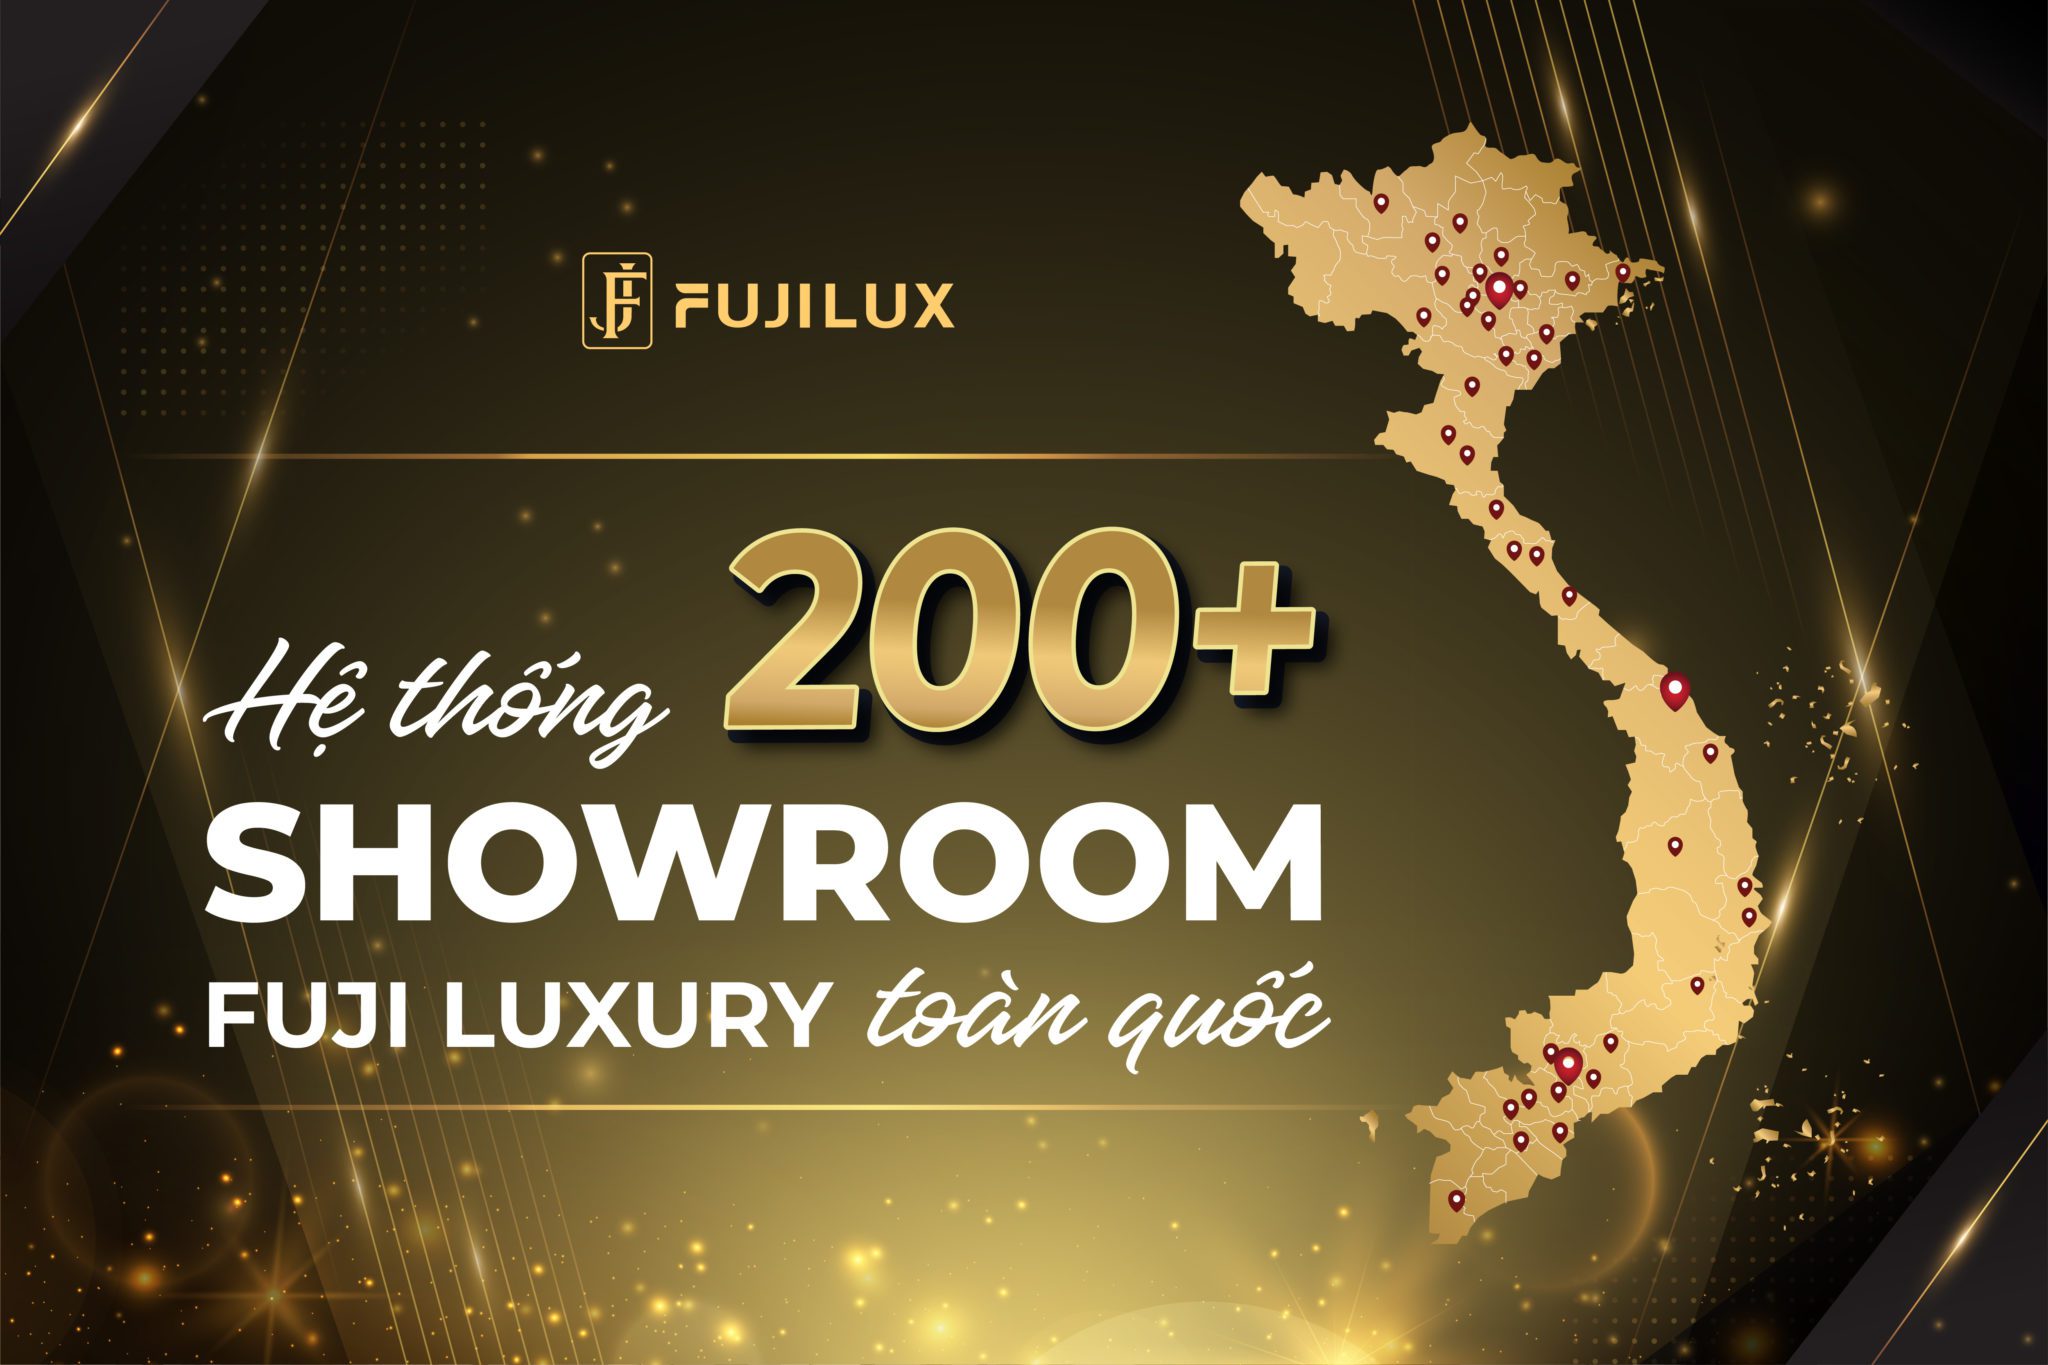 Hệ thống showroom của FujiLux